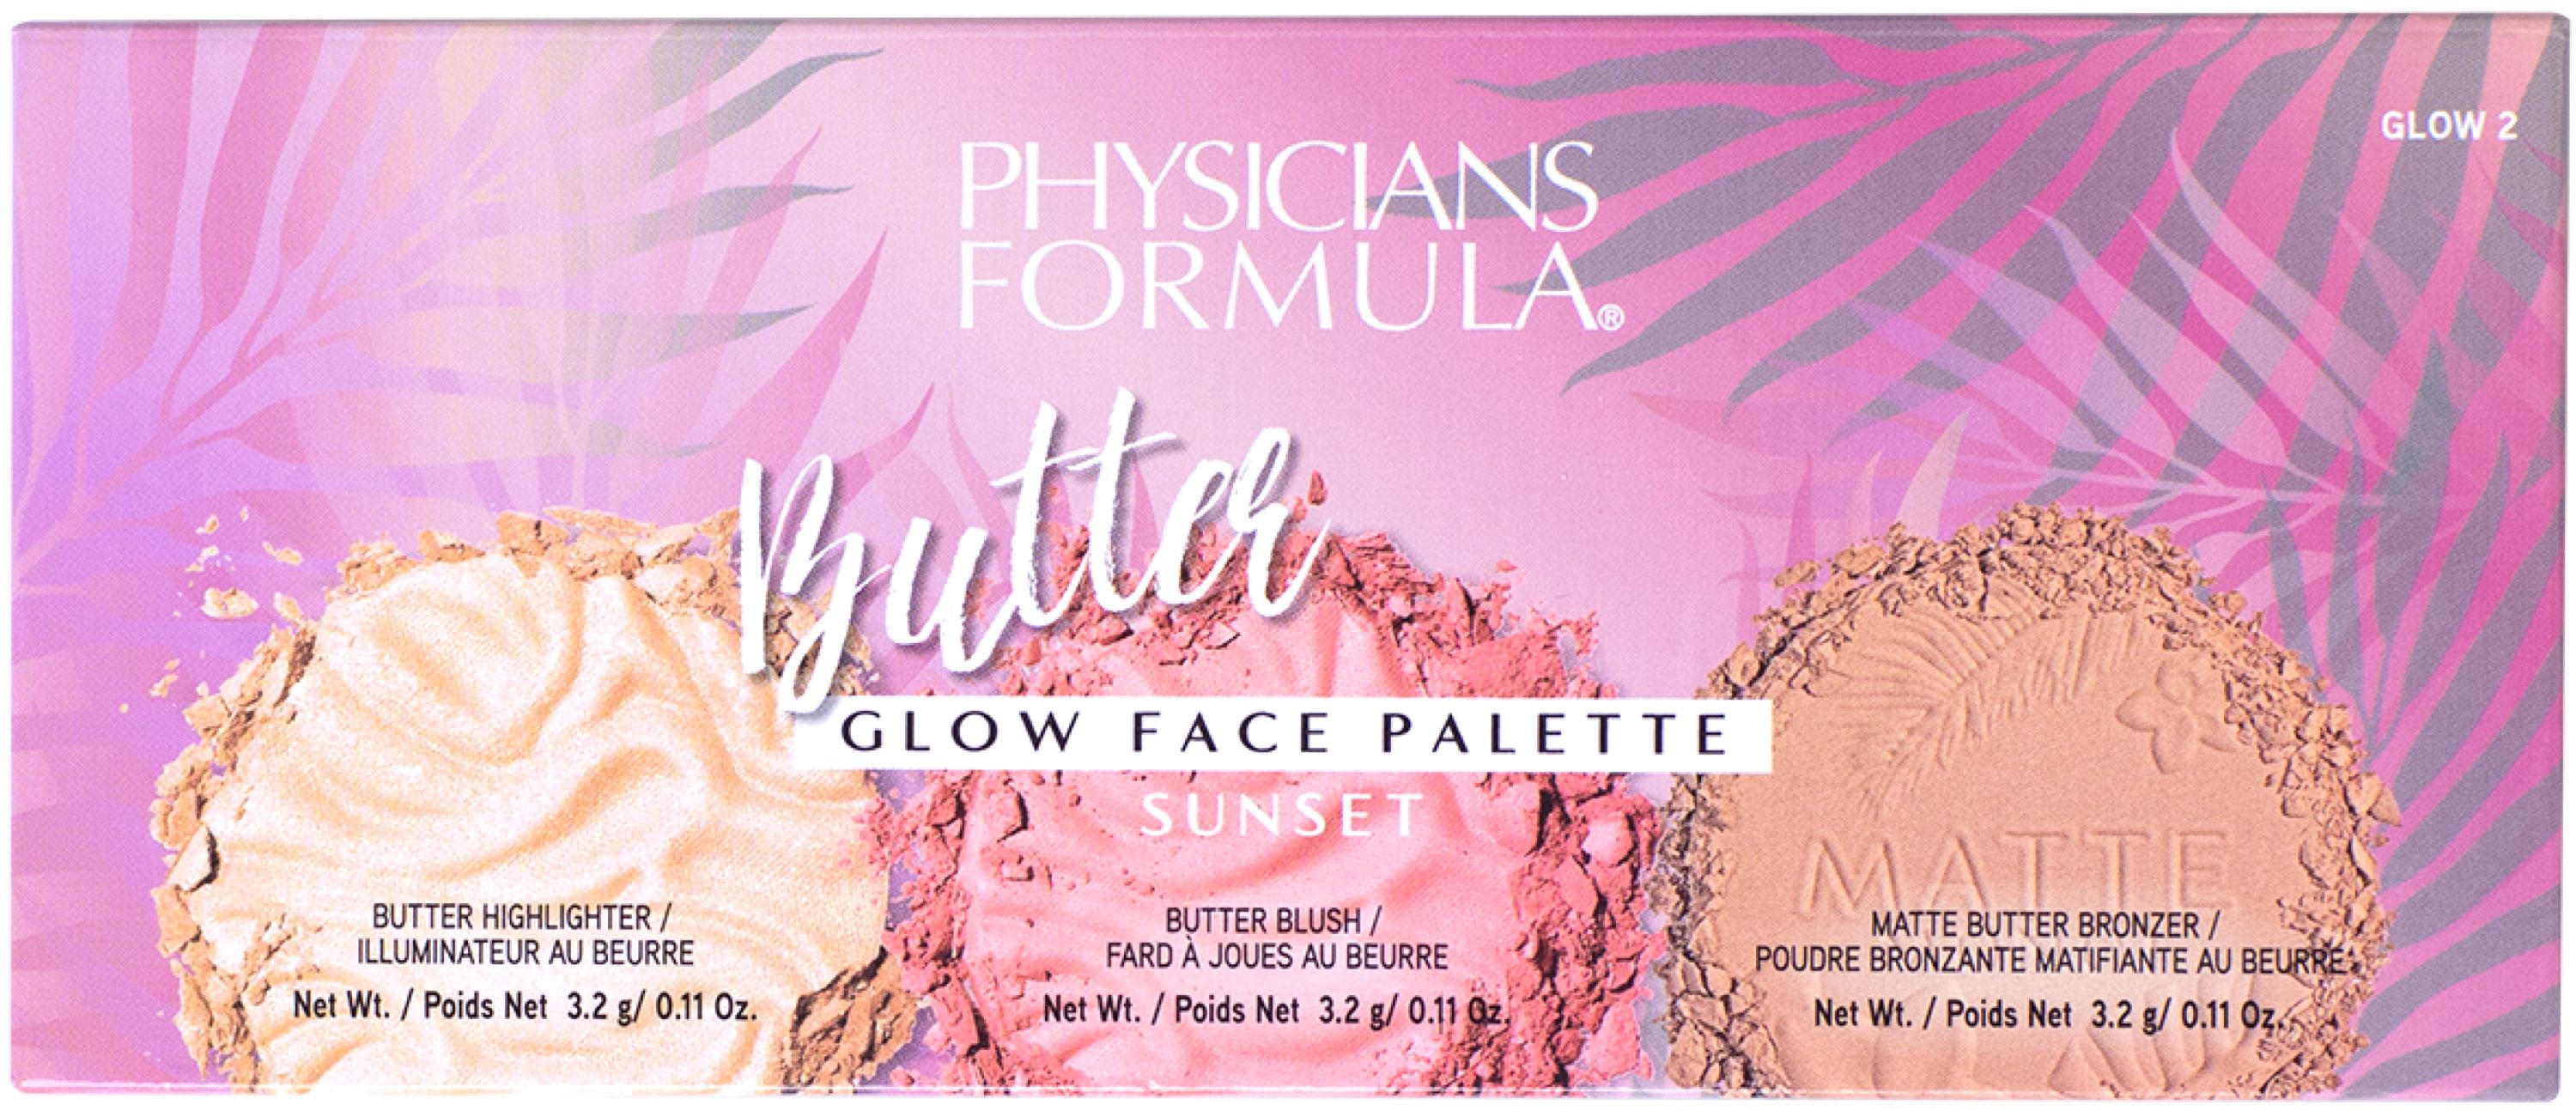 Murumuru Butter Glow Face Palette - Physicians Formula